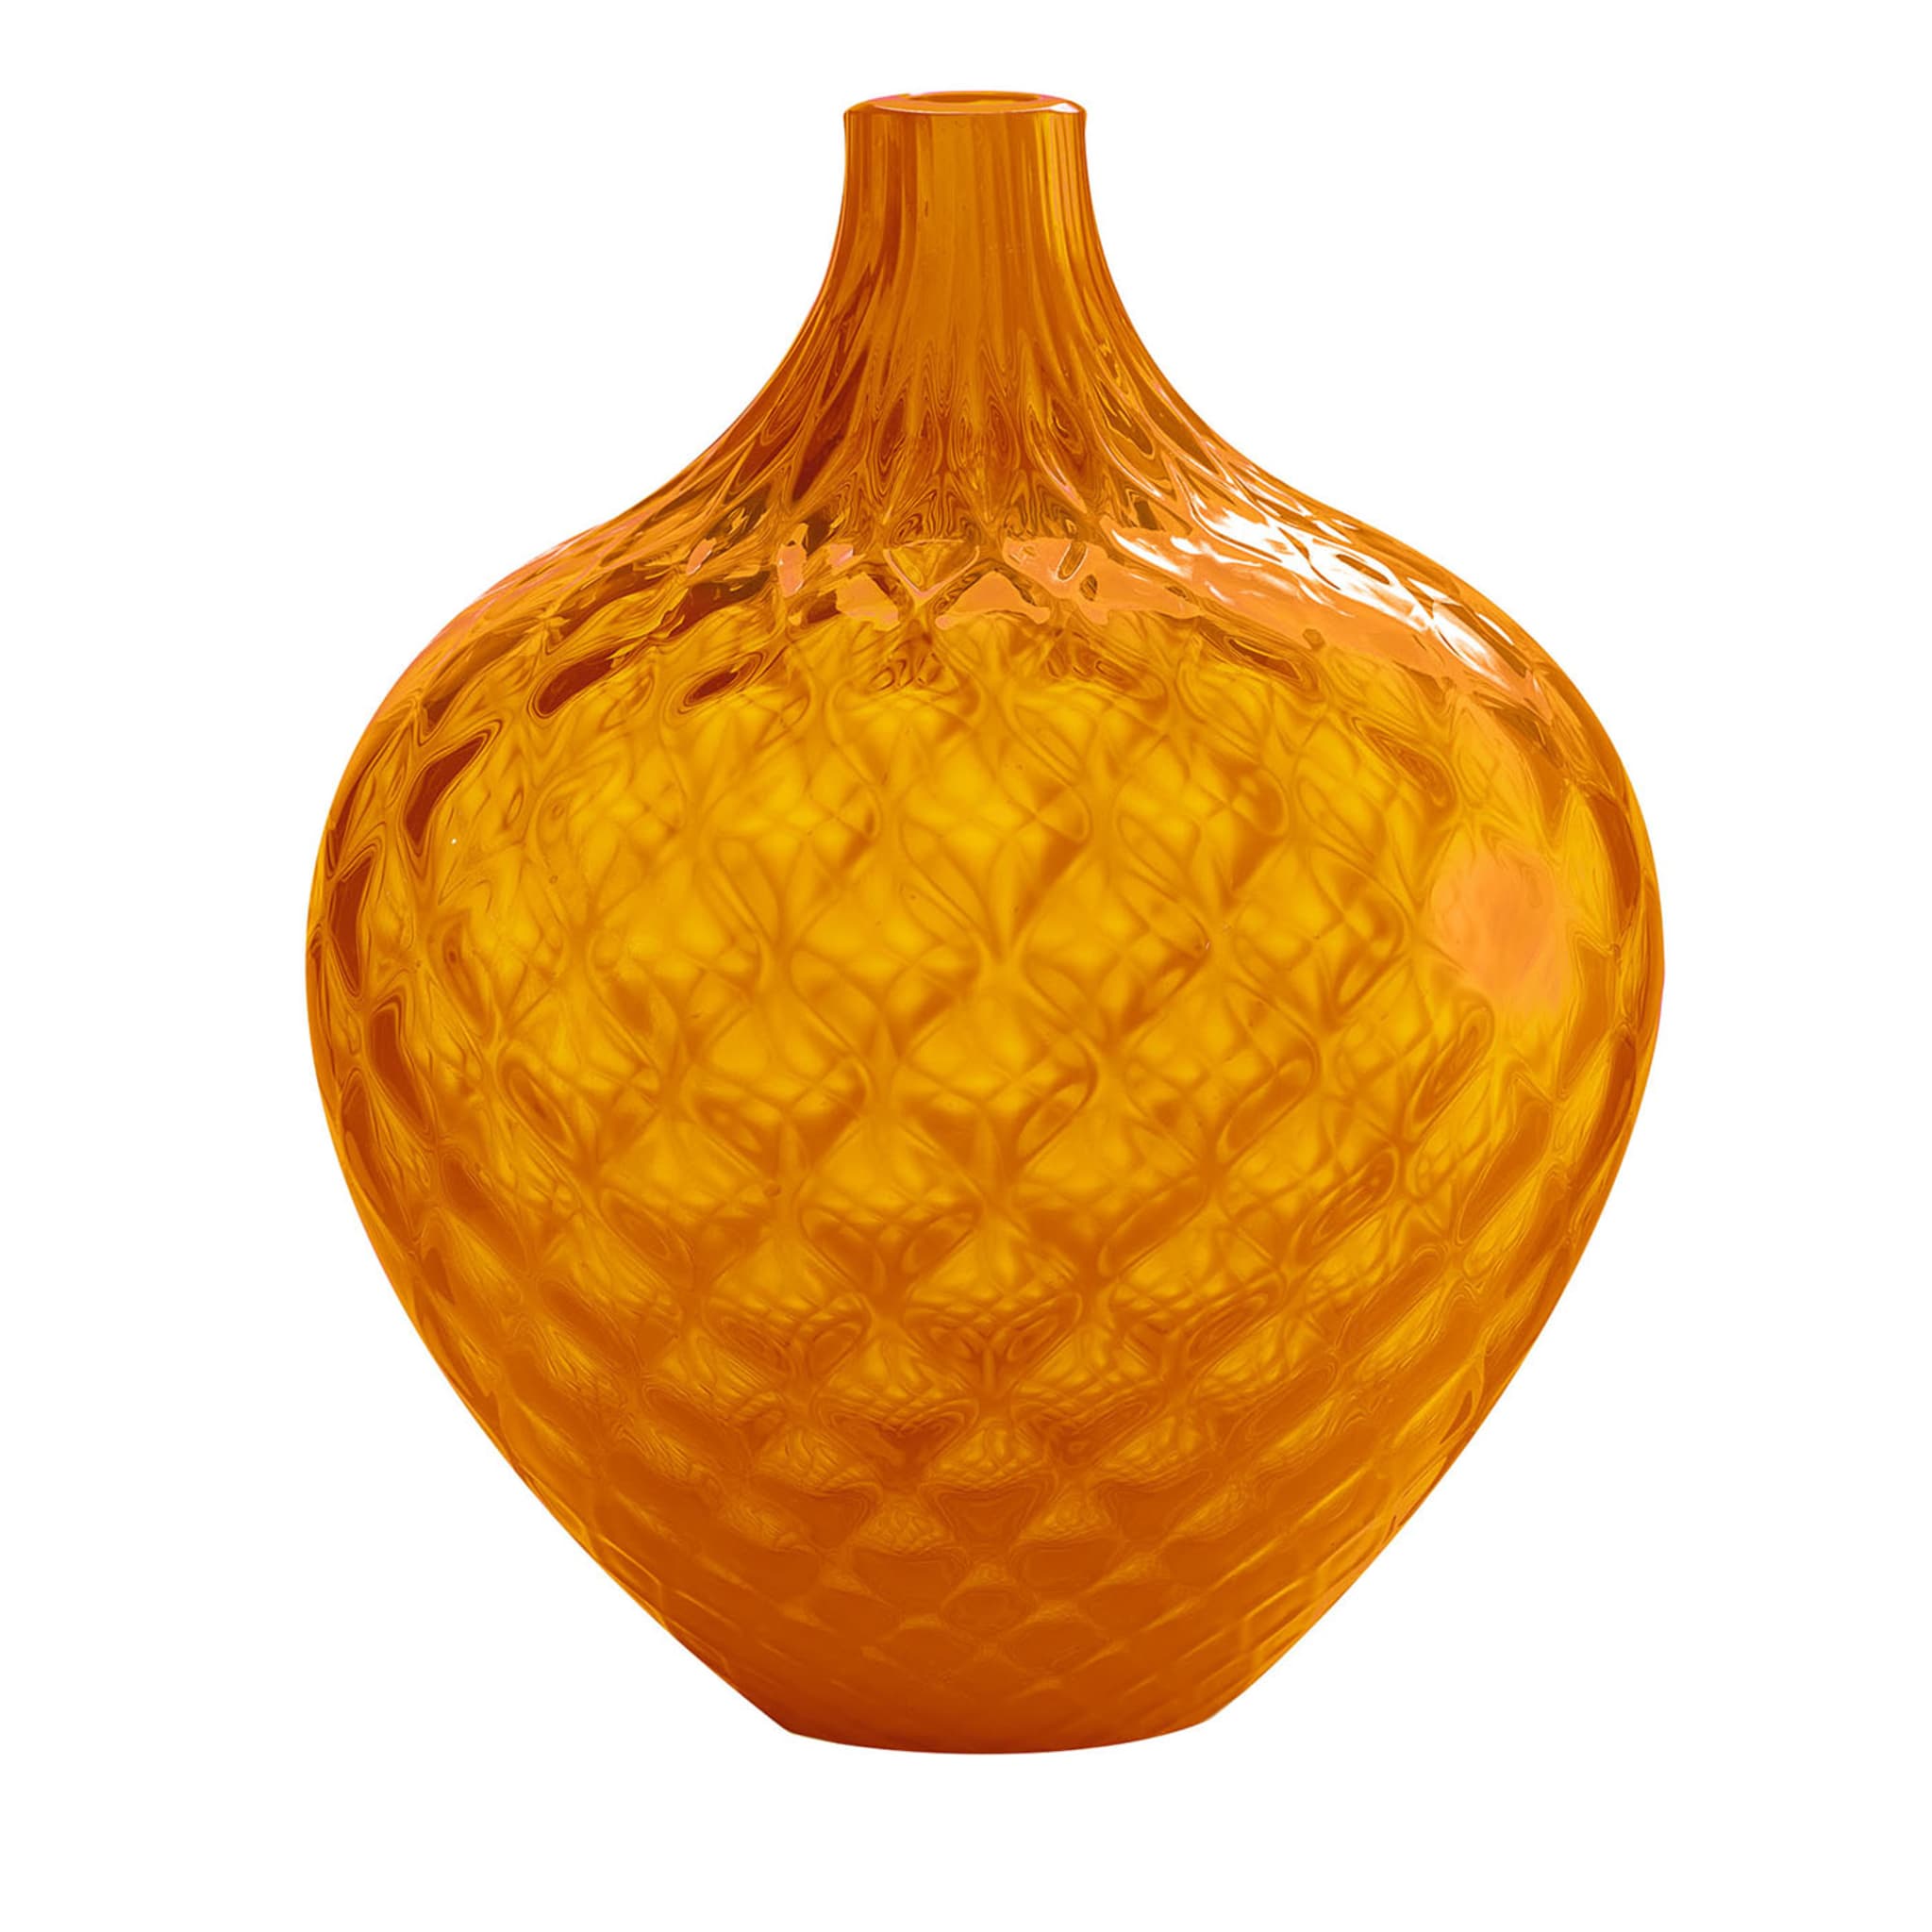 Samarcanda Medium Balloton Orange Dekorative Vase - Hauptansicht